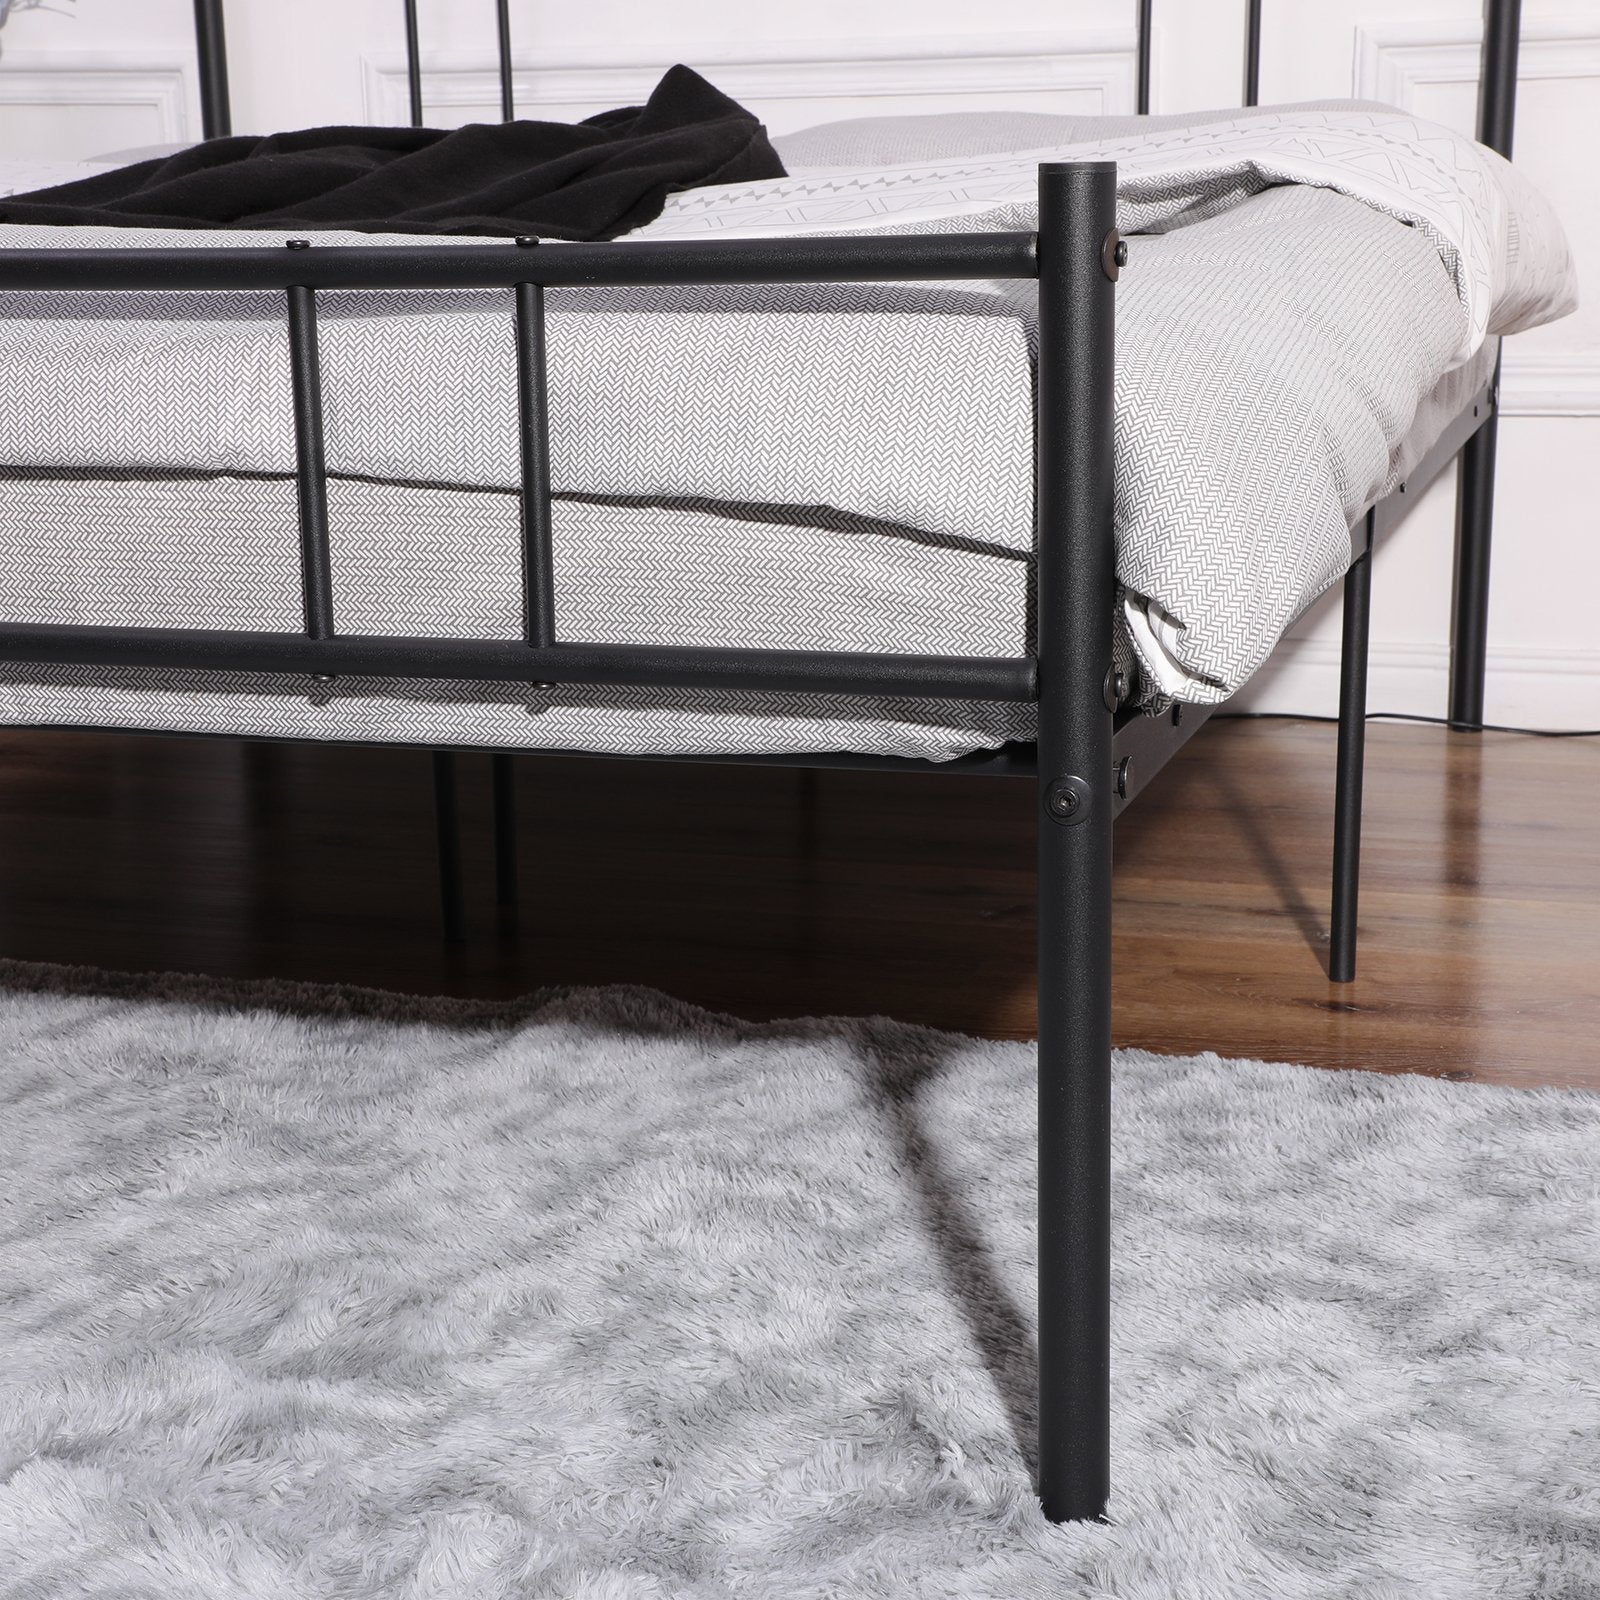 LOCARNO Single/Double Metal Bed 94 * 196 cm/143 * 196 cm - Black